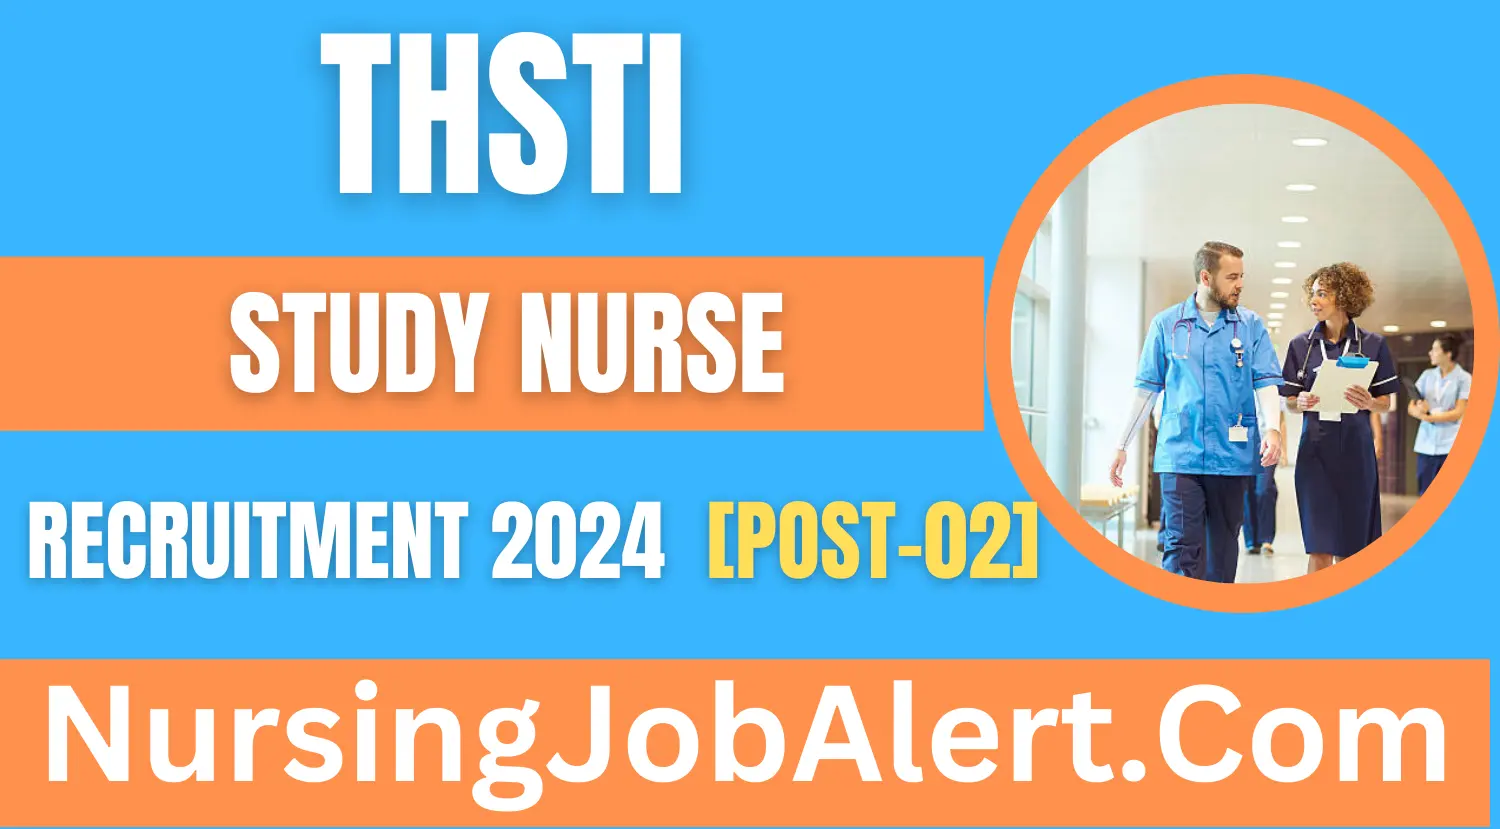 THSTI Staff Nurse Recruitment 2024 Study Nurse